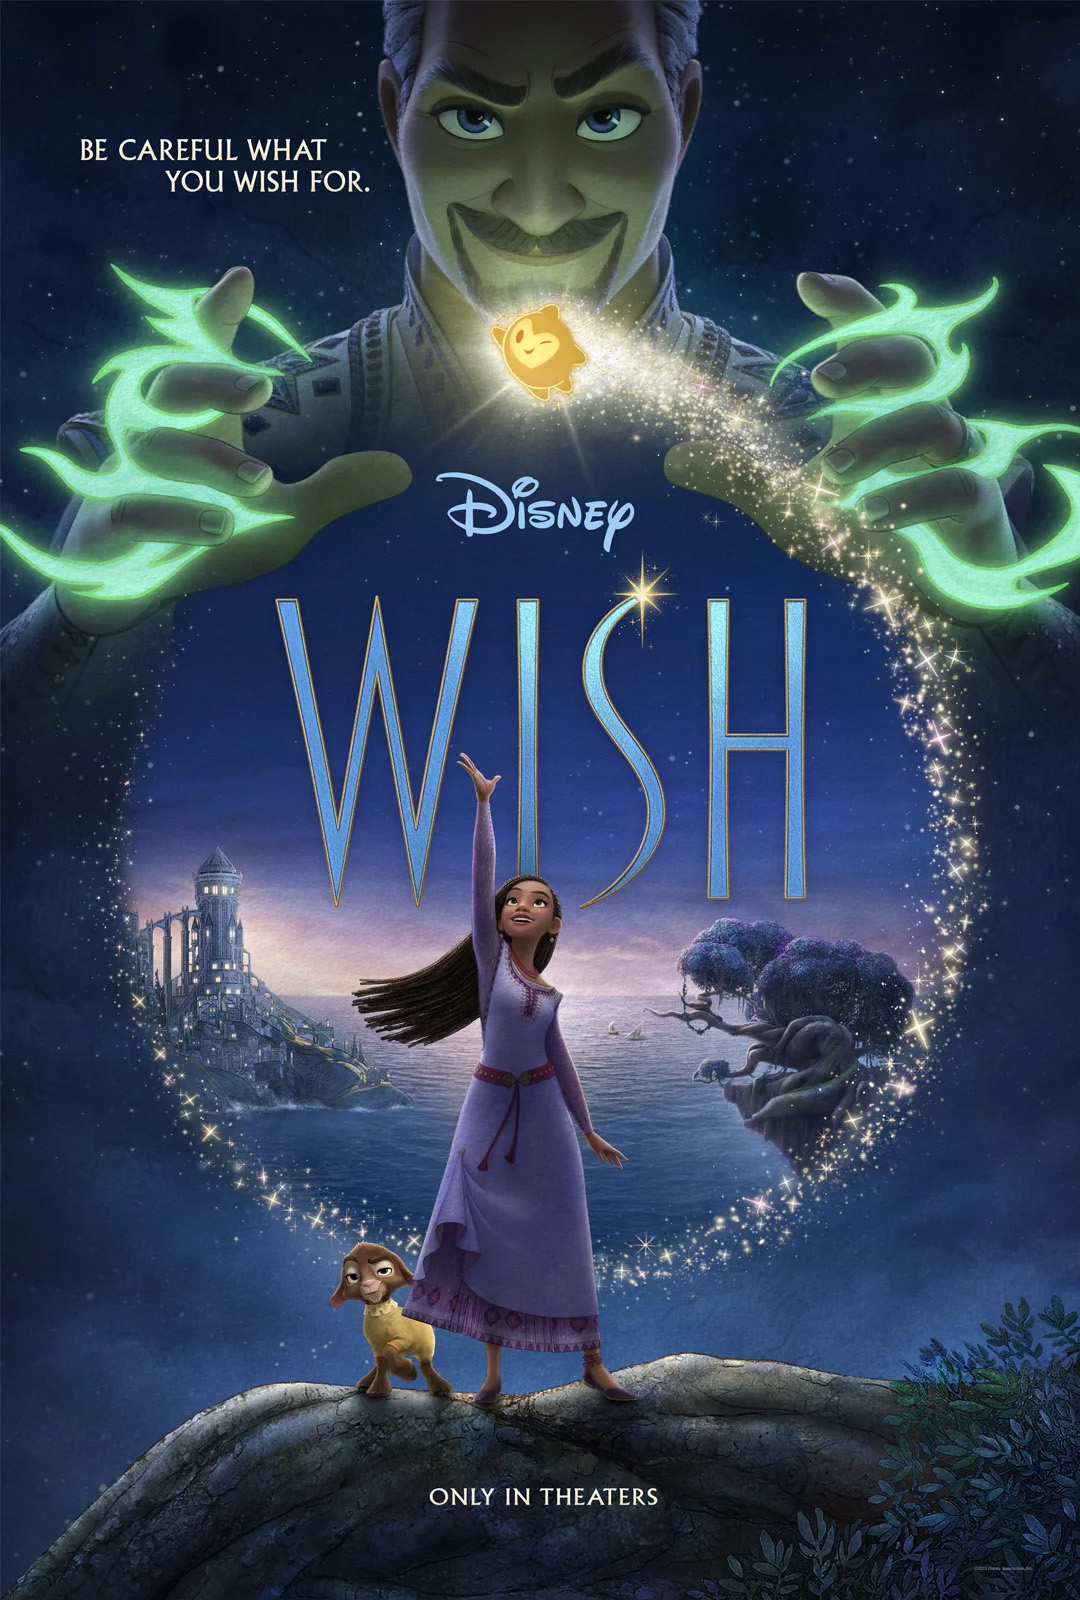 Movie Poster: Wish